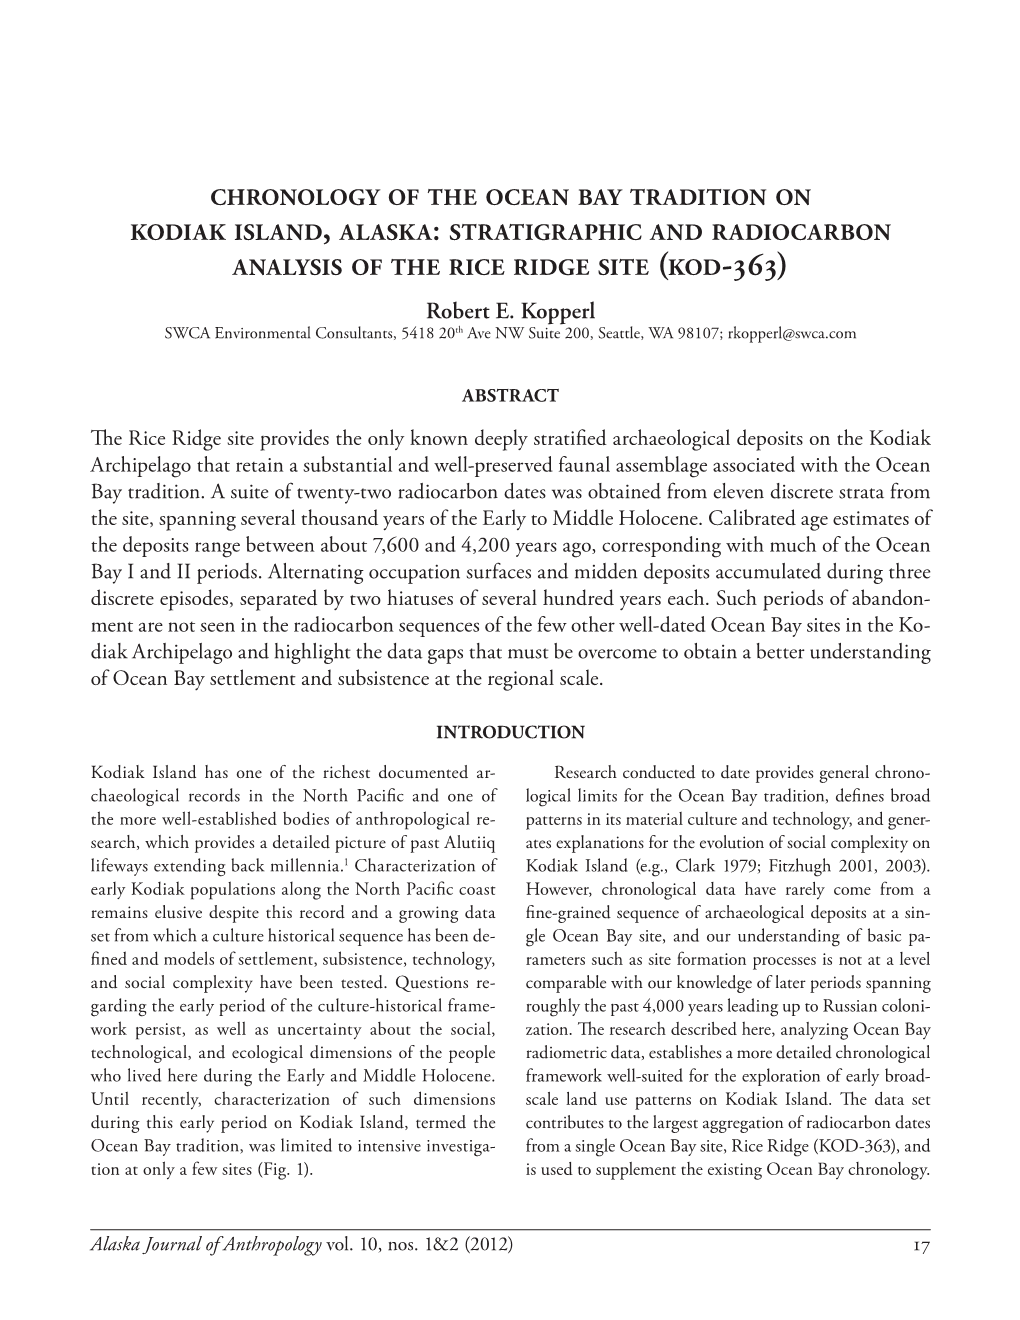 Chronology of the Ocean Bay Tradition on Kodiak Island, Alaska: Stratigraphic and Radiocarbon Analysis of the Rice Ridge Site (Kod-363) Robert E